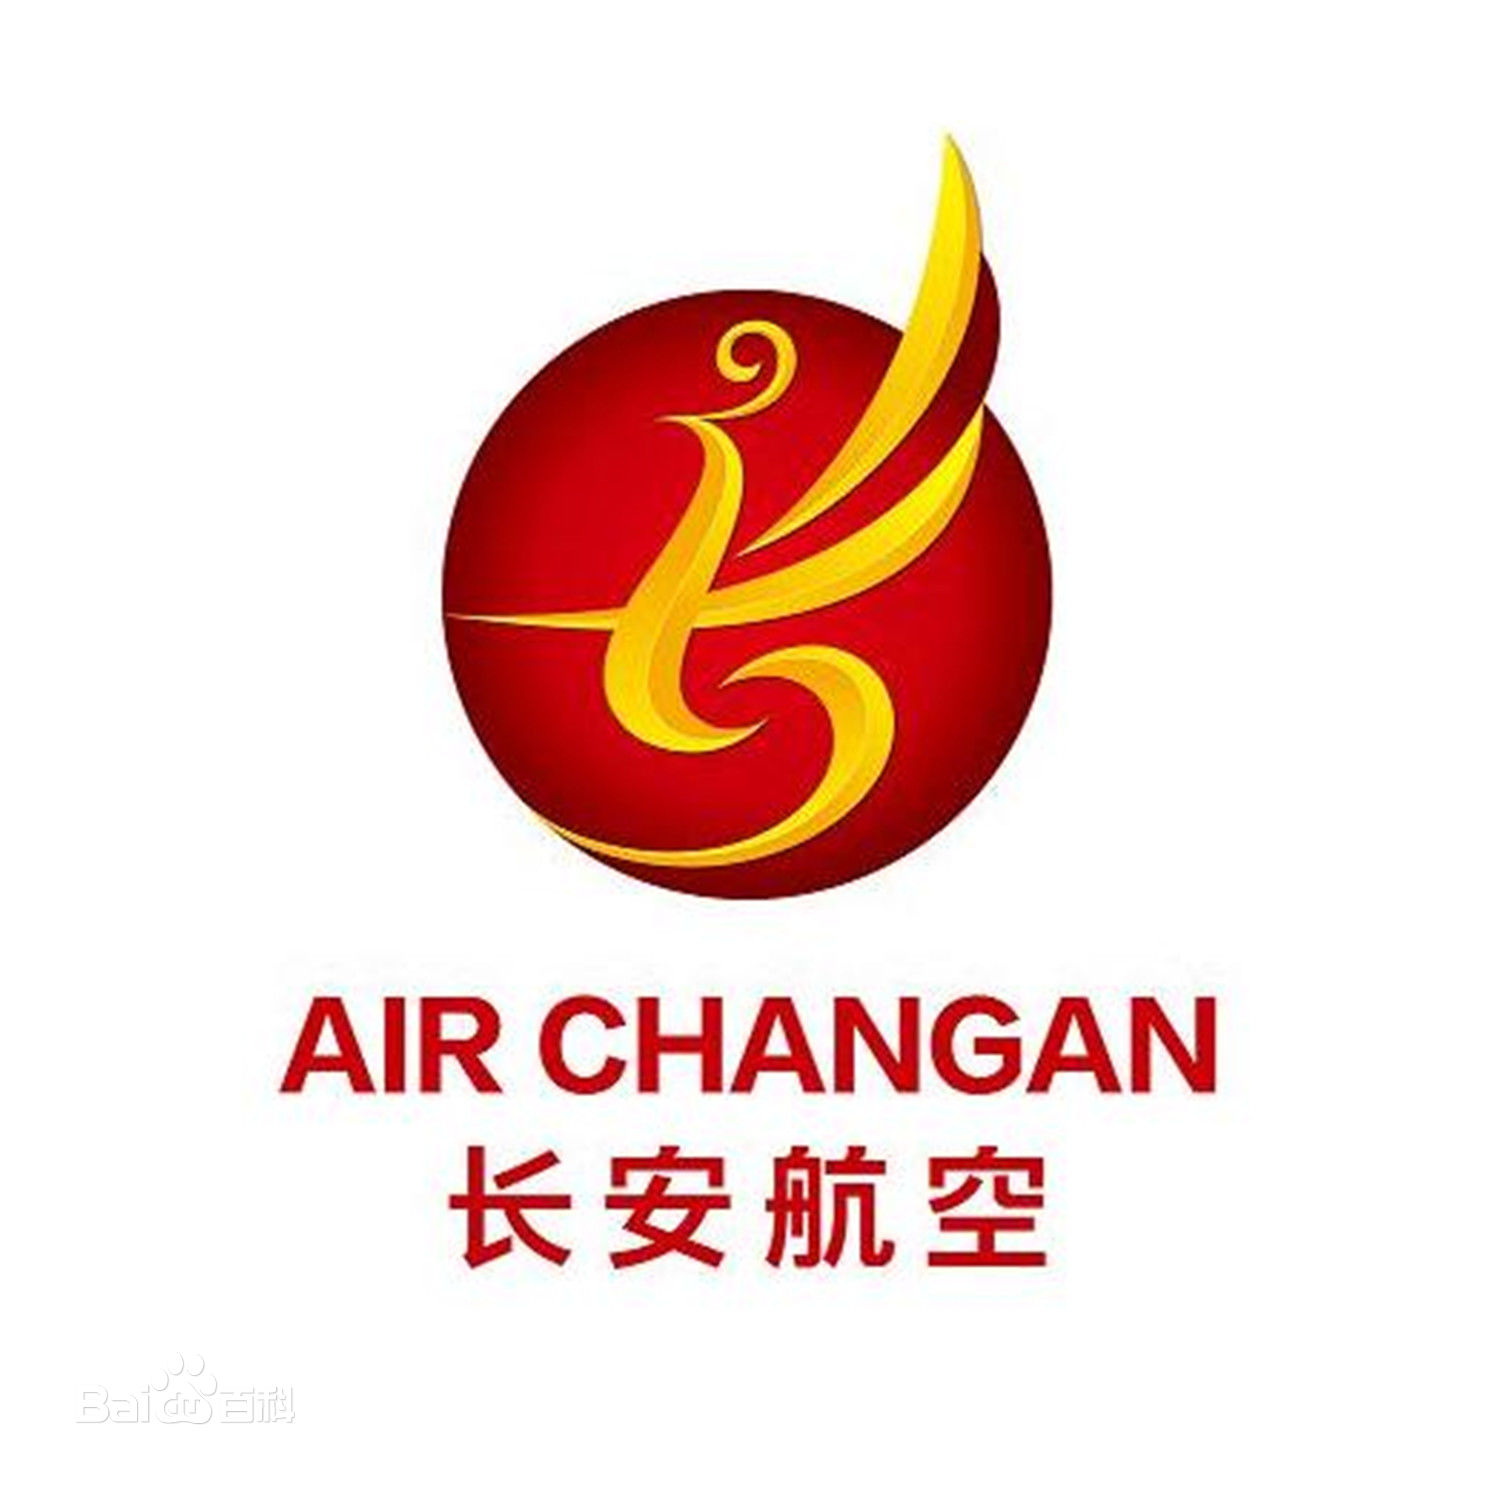 Air Changan logo